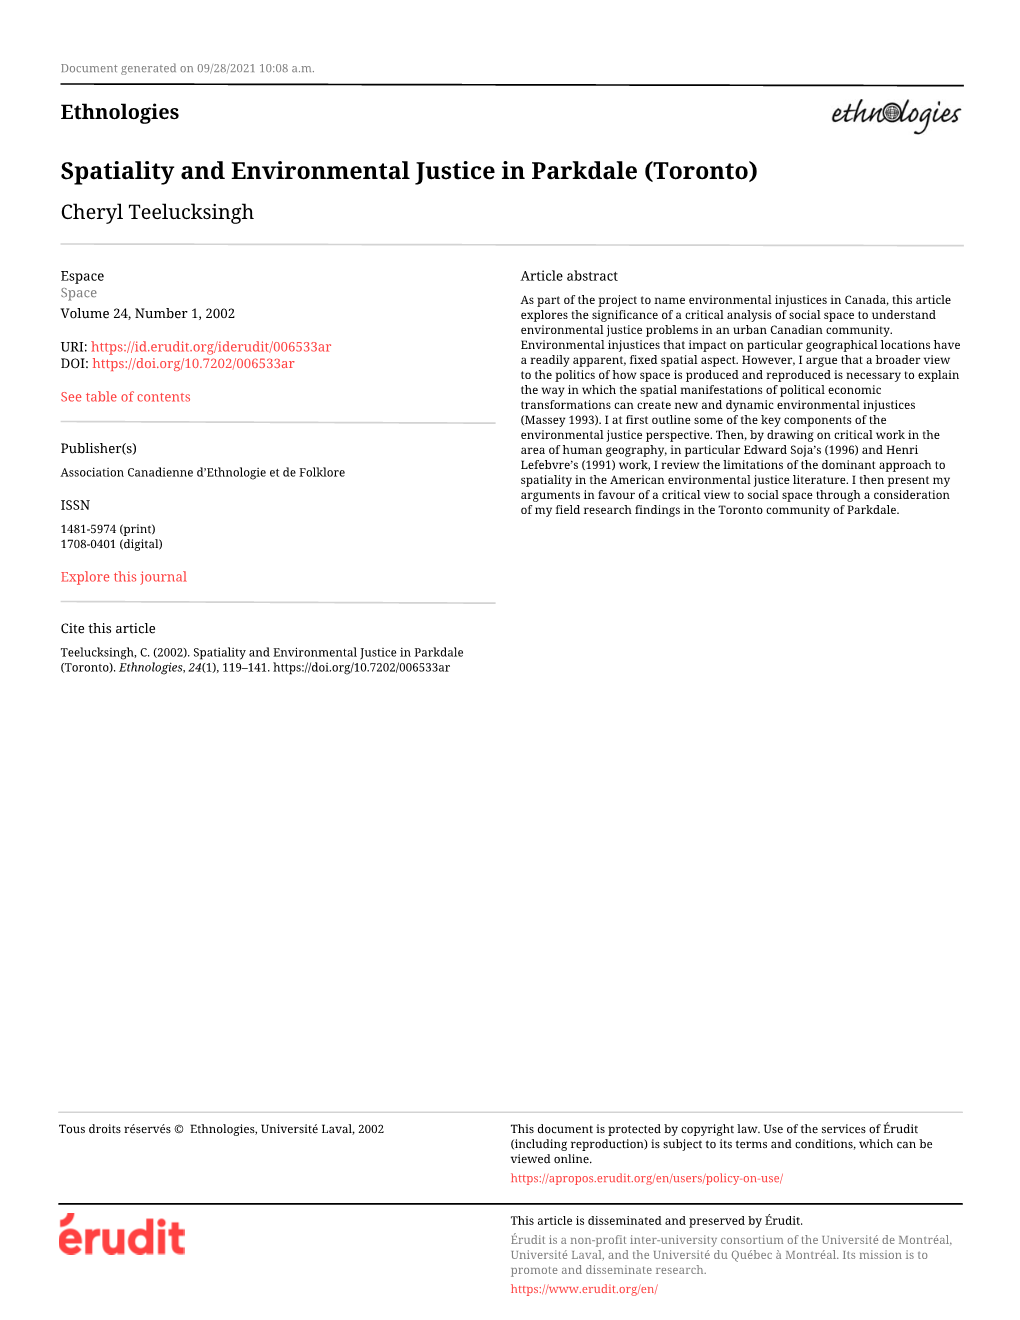 Spatiality and Environmental Justice in Parkdale (Toronto) Cheryl Teelucksingh